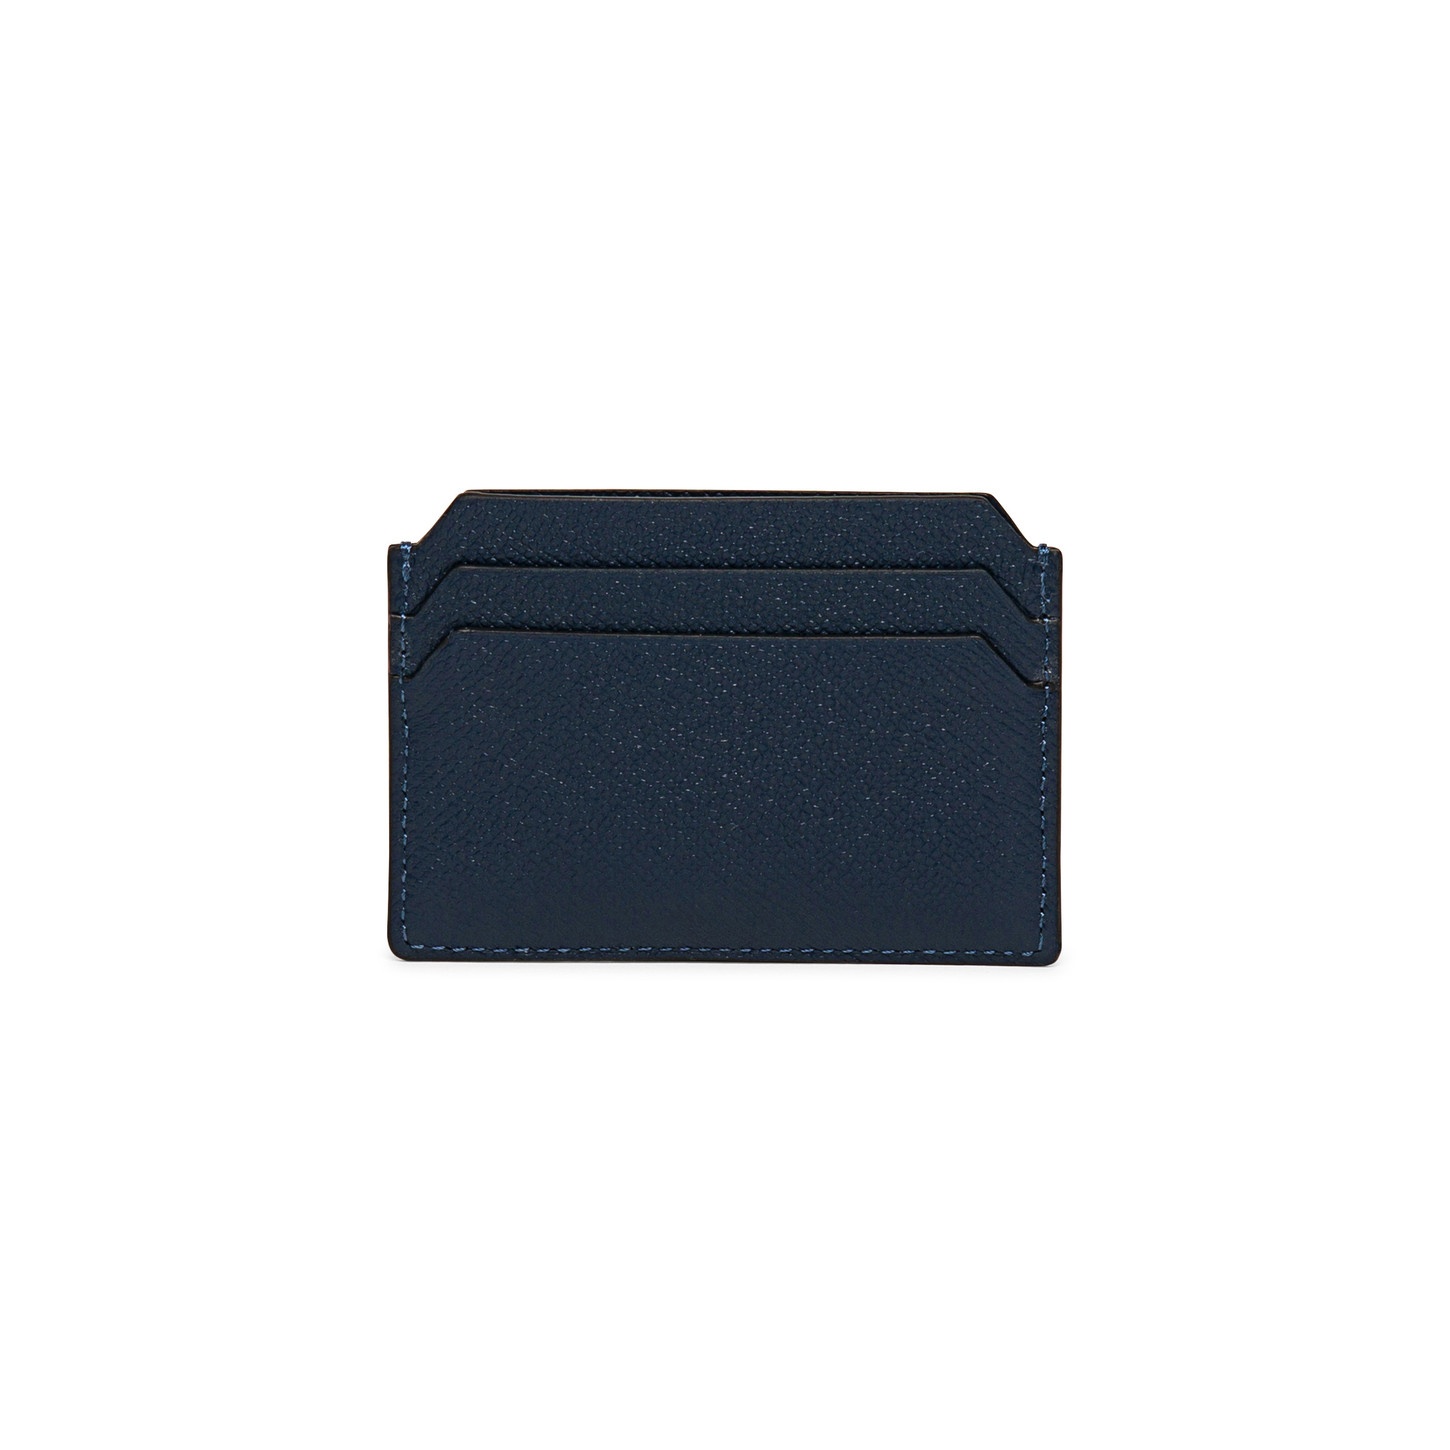 Blue saffiano leather credit card holder - 2